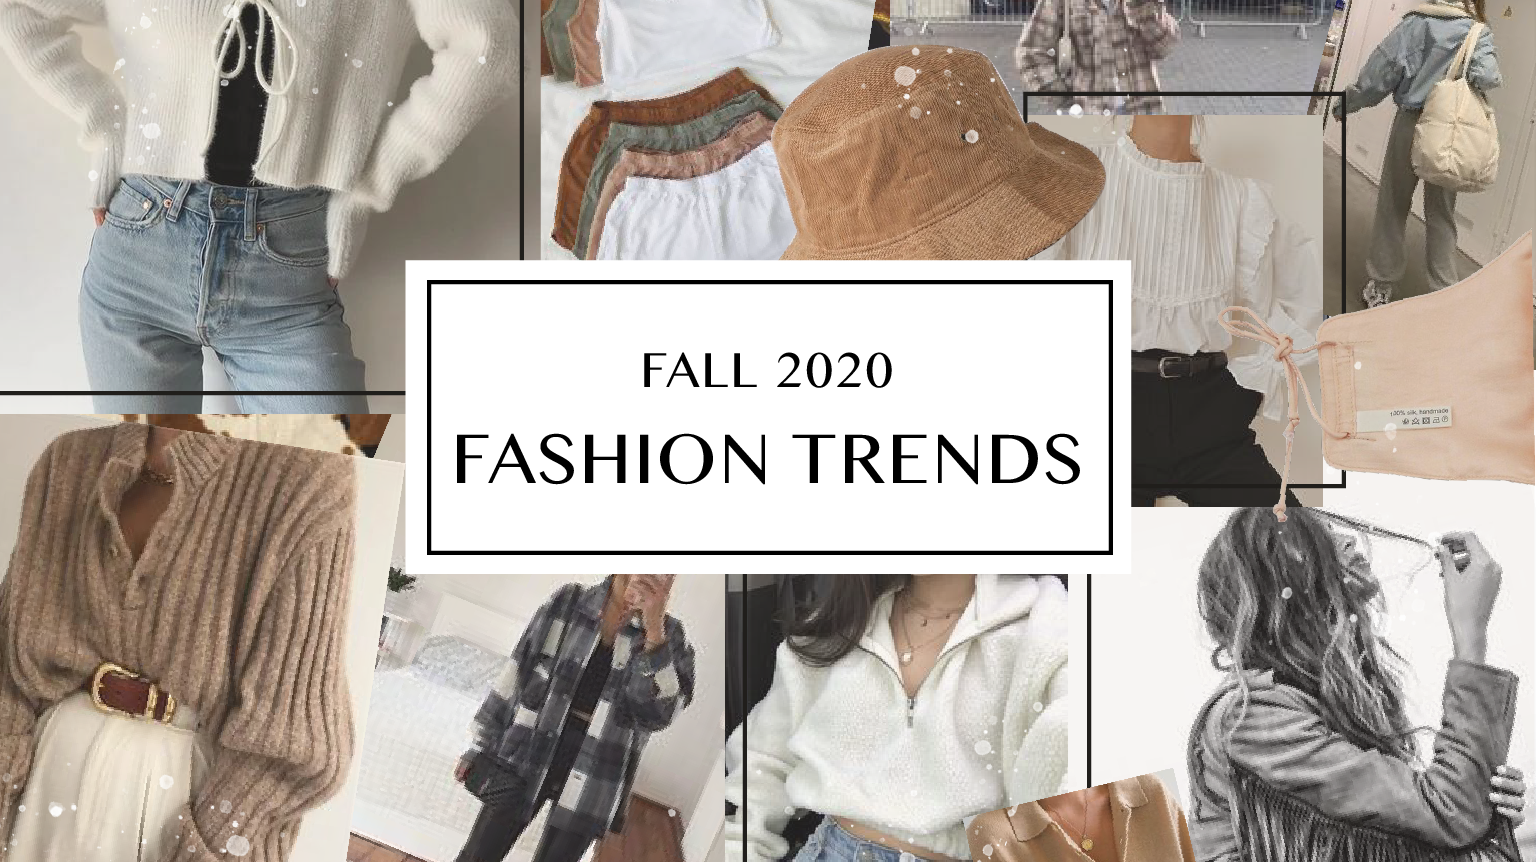 Fall 2020 Fashion Trends